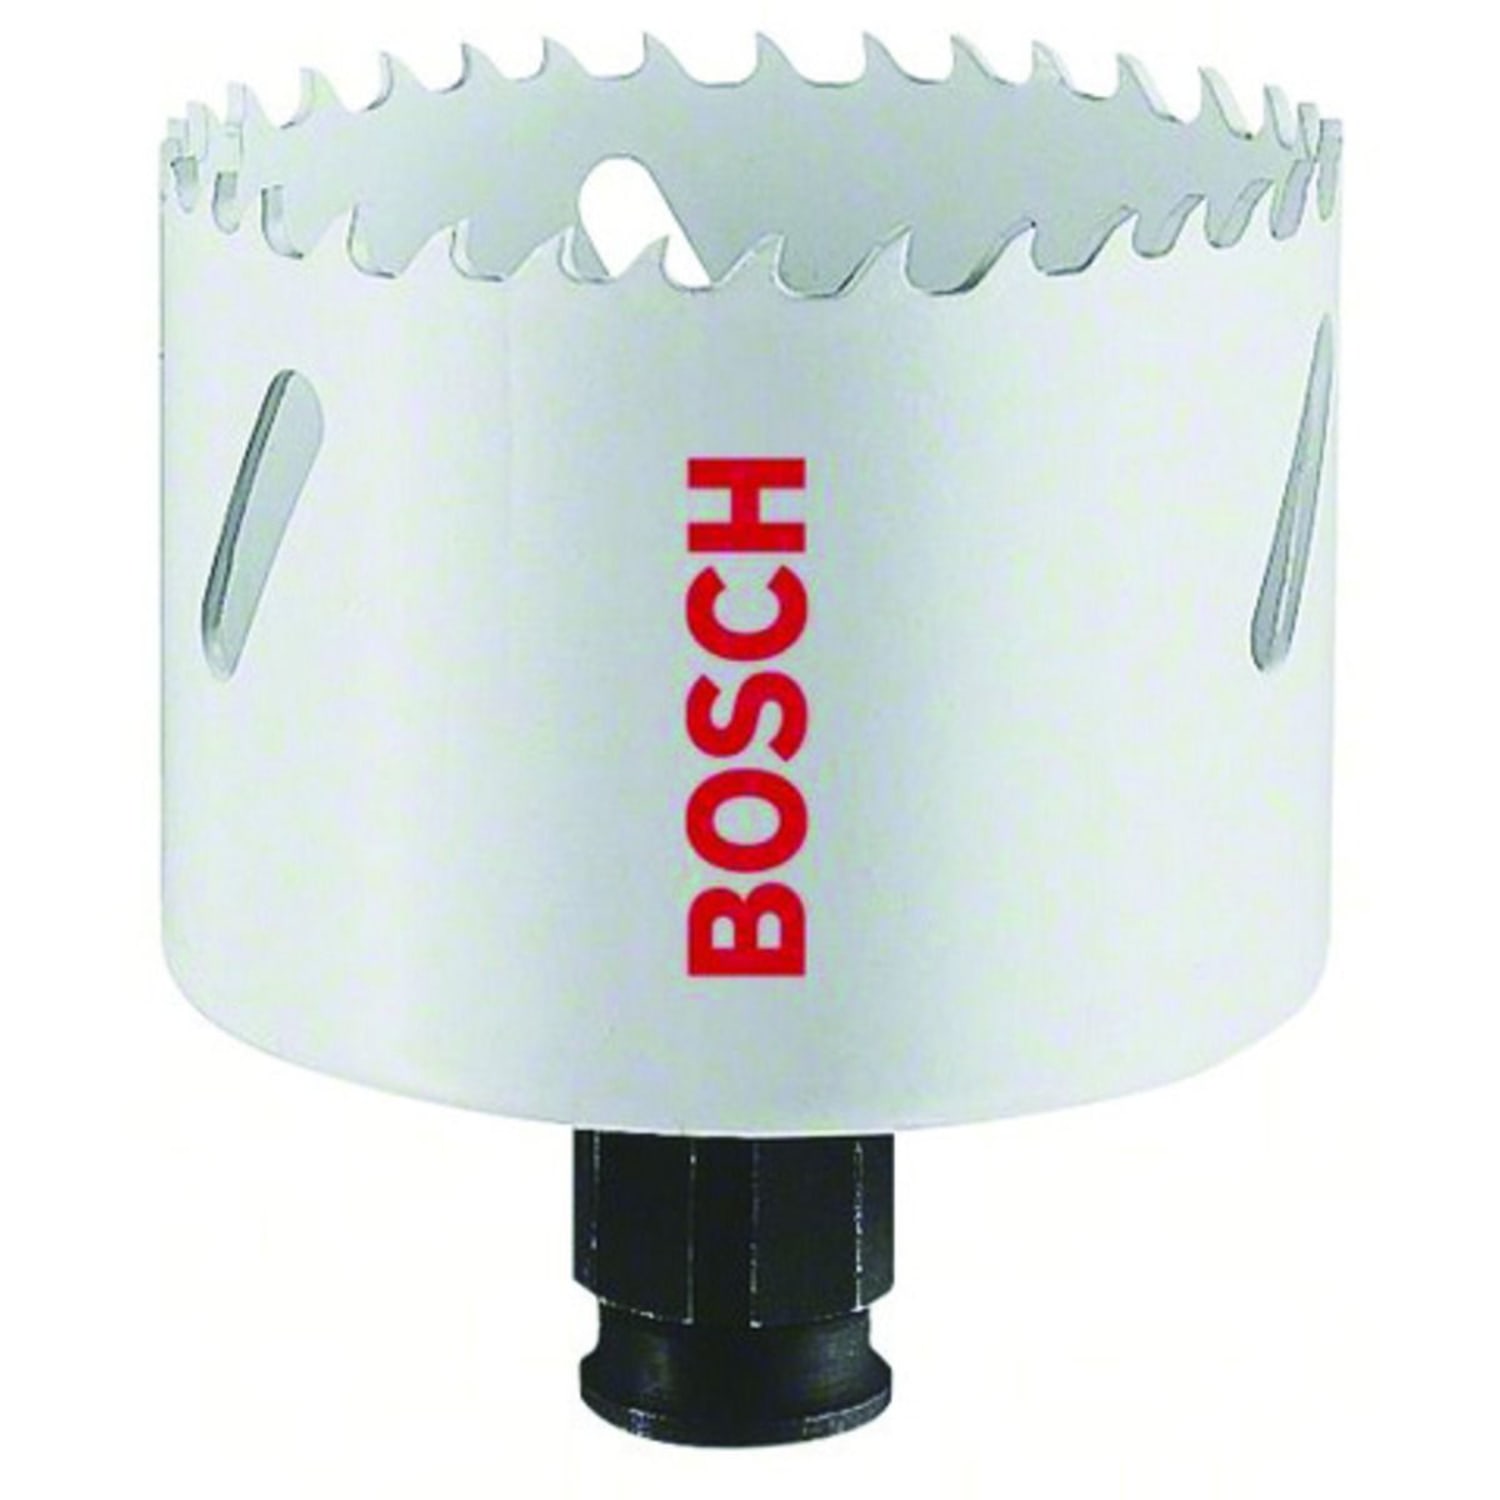 Bosch progressor holesaw 51mm 